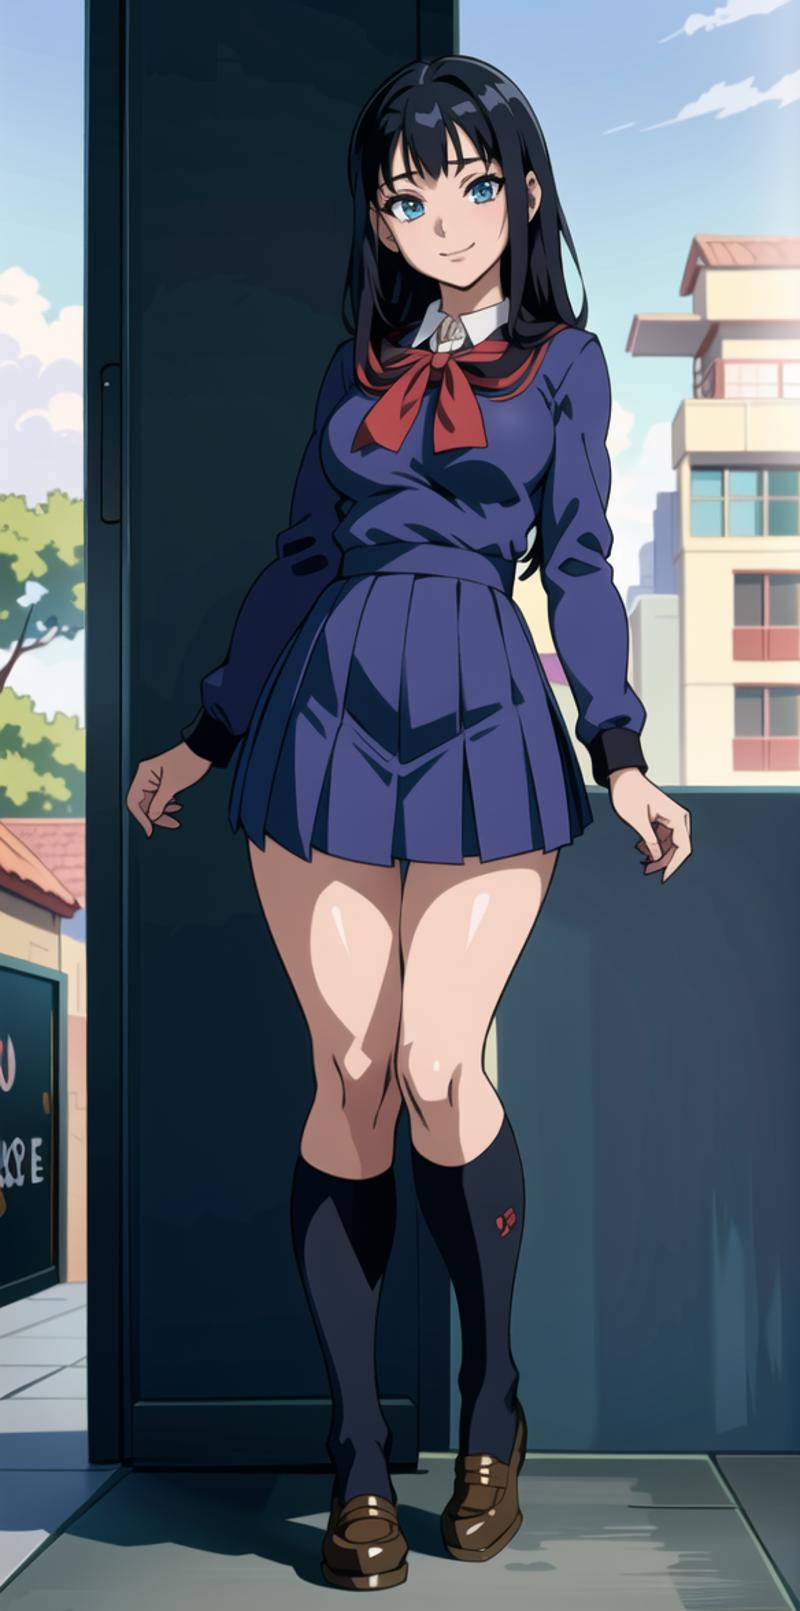 Mistoon_Anime school uniform image by sleepbreaker